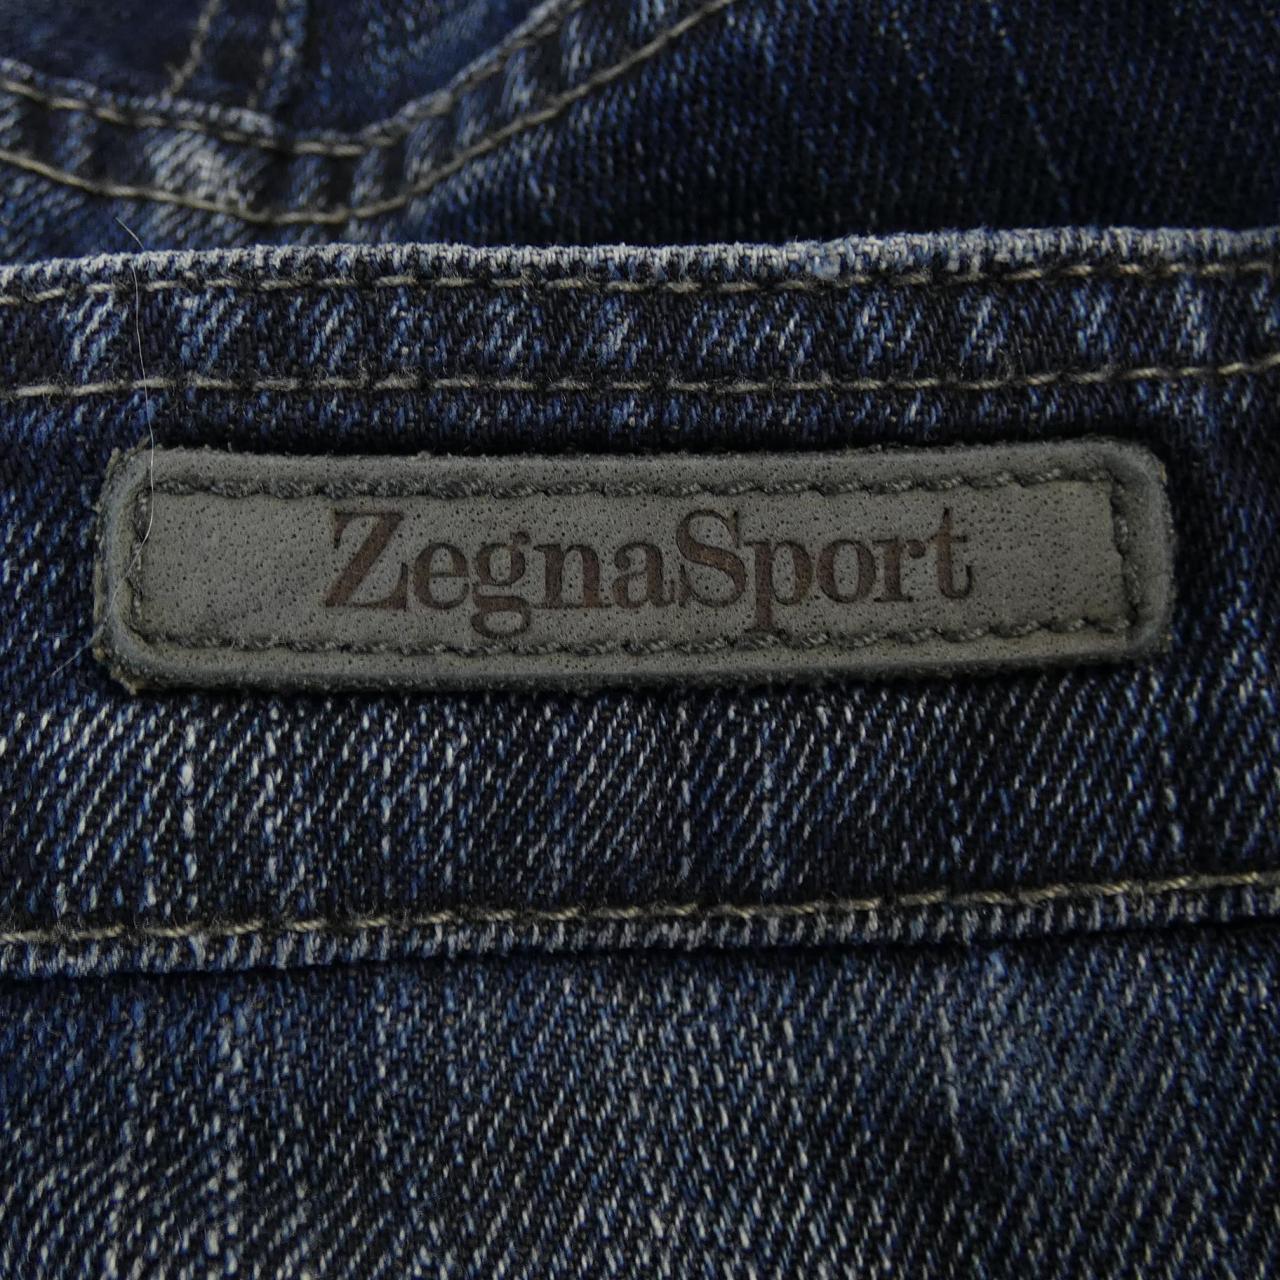 Zegna sports ZEGNA SPORT jeans